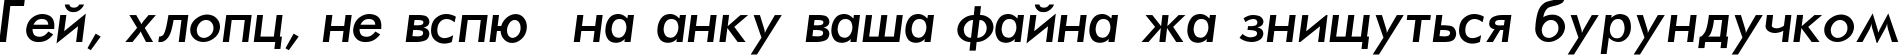 Пример написания шрифтом Futura-Normal-Italic текста на украинском